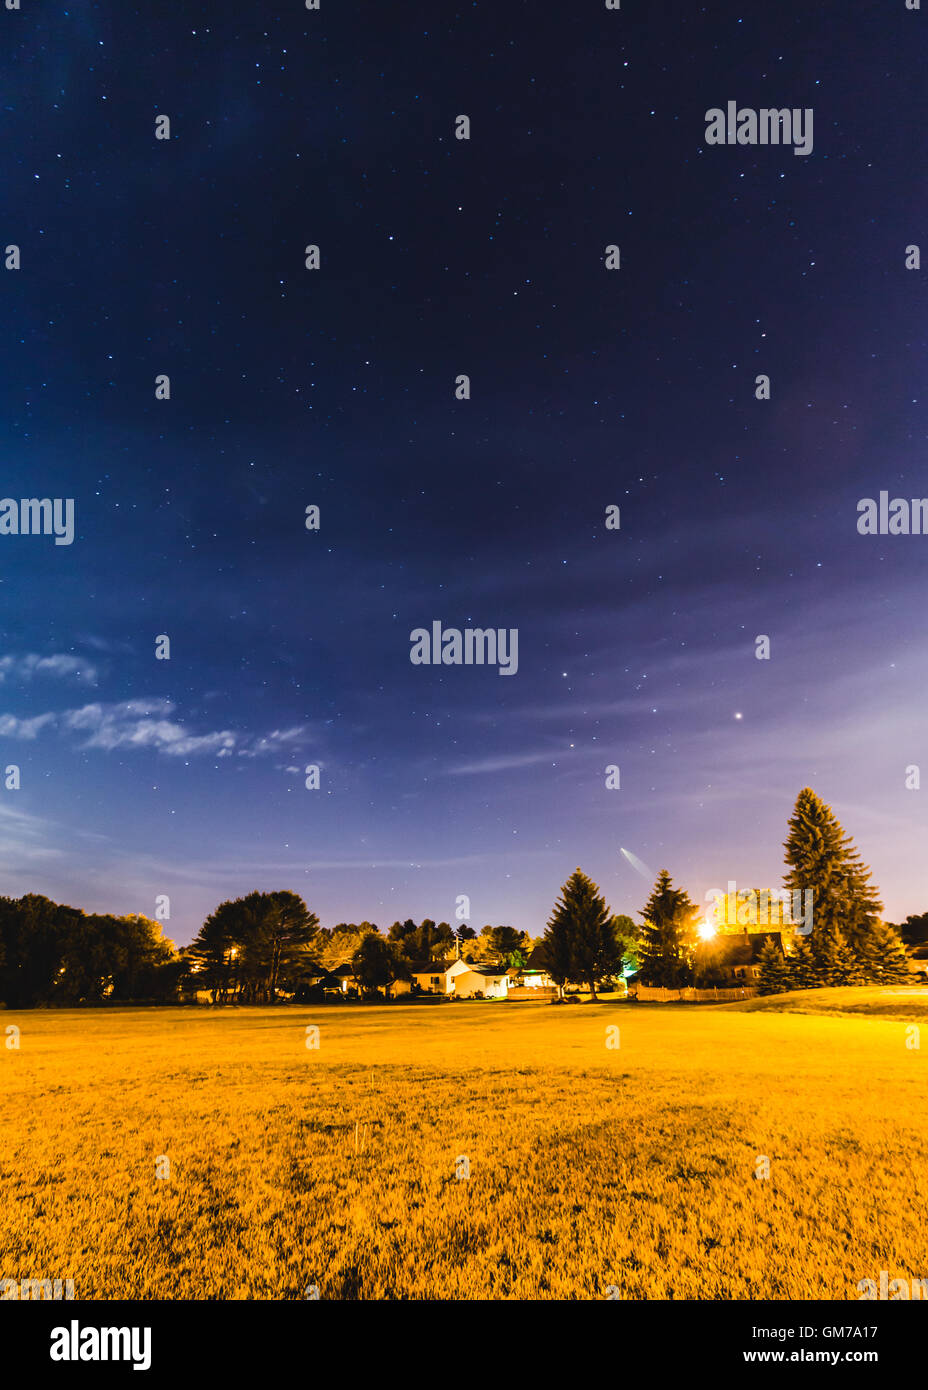 Backyard Stars In Night Sky Above A Small Neighborhood Stock Photo Alamy